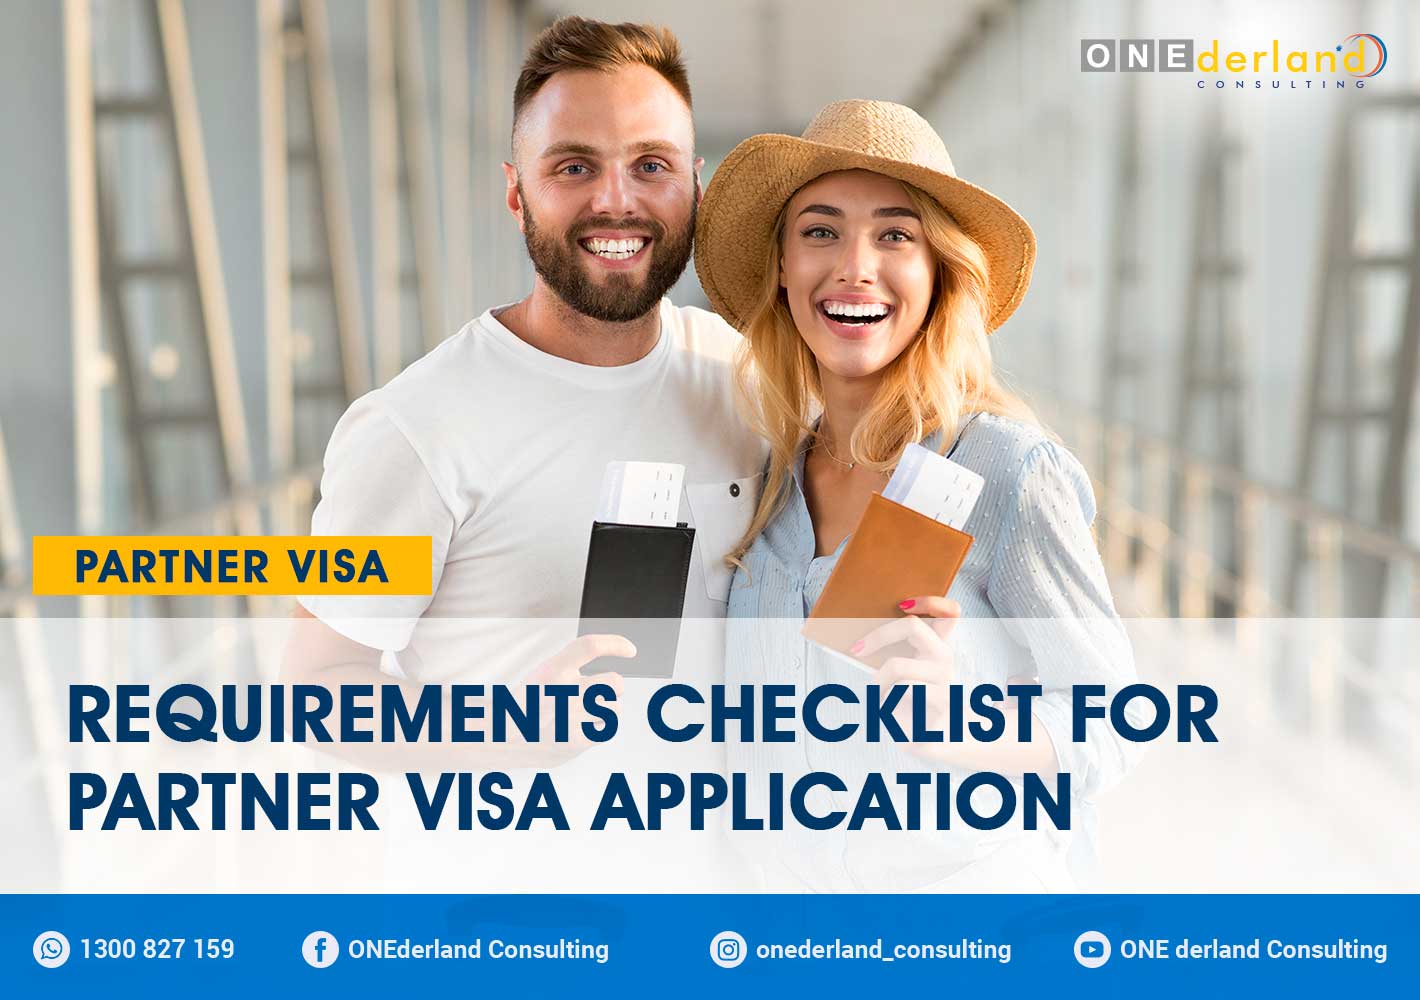 Requirements Checklist for Partner Visa Application